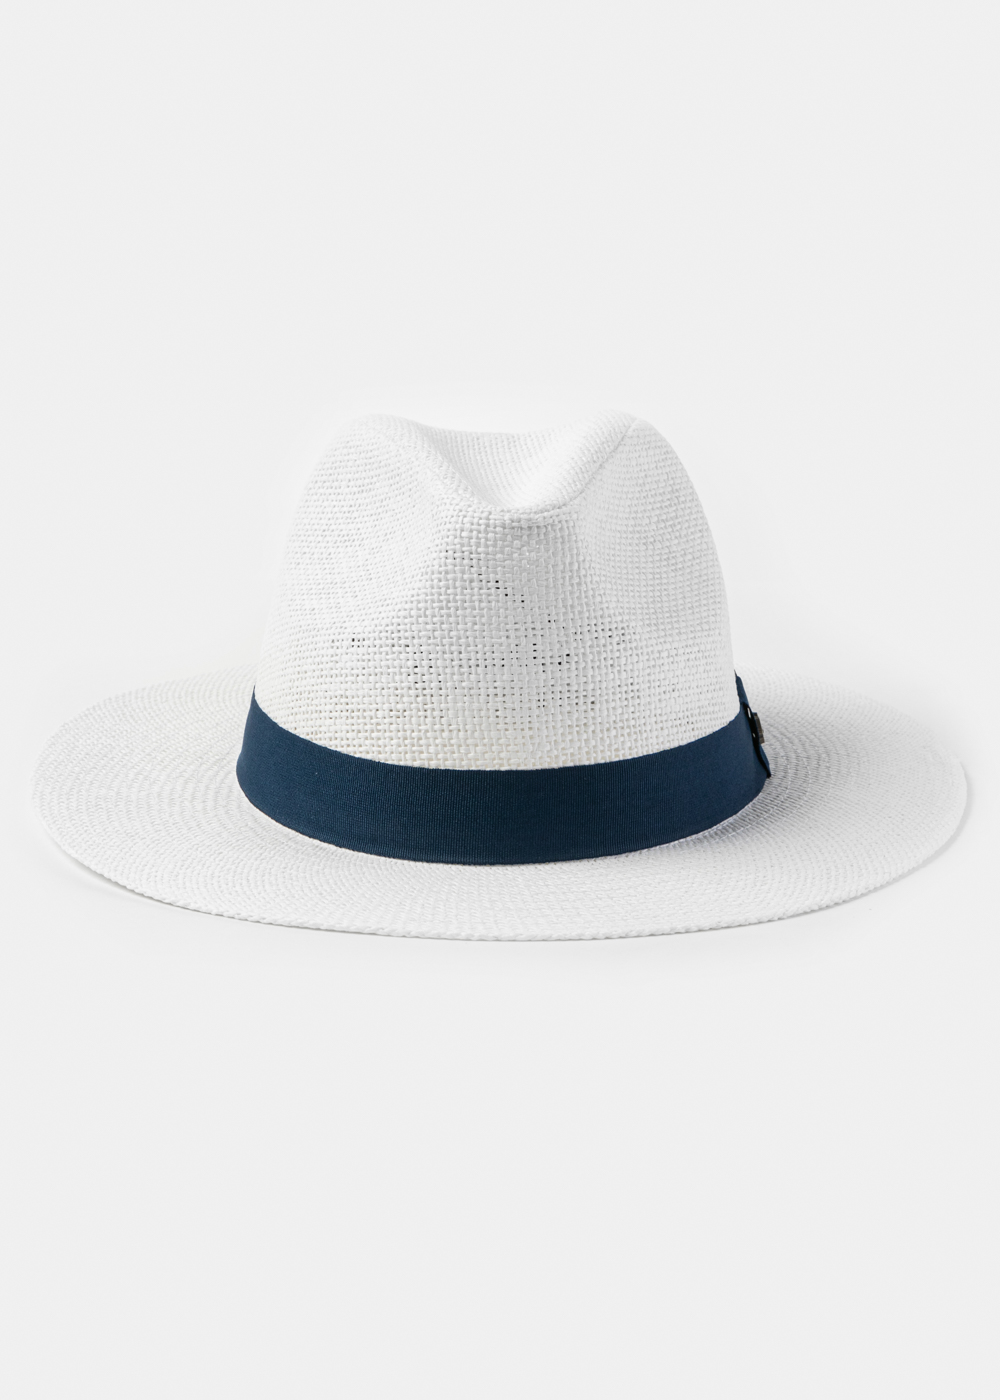 White Panama Style Hat w/ Navy Blue Hatband